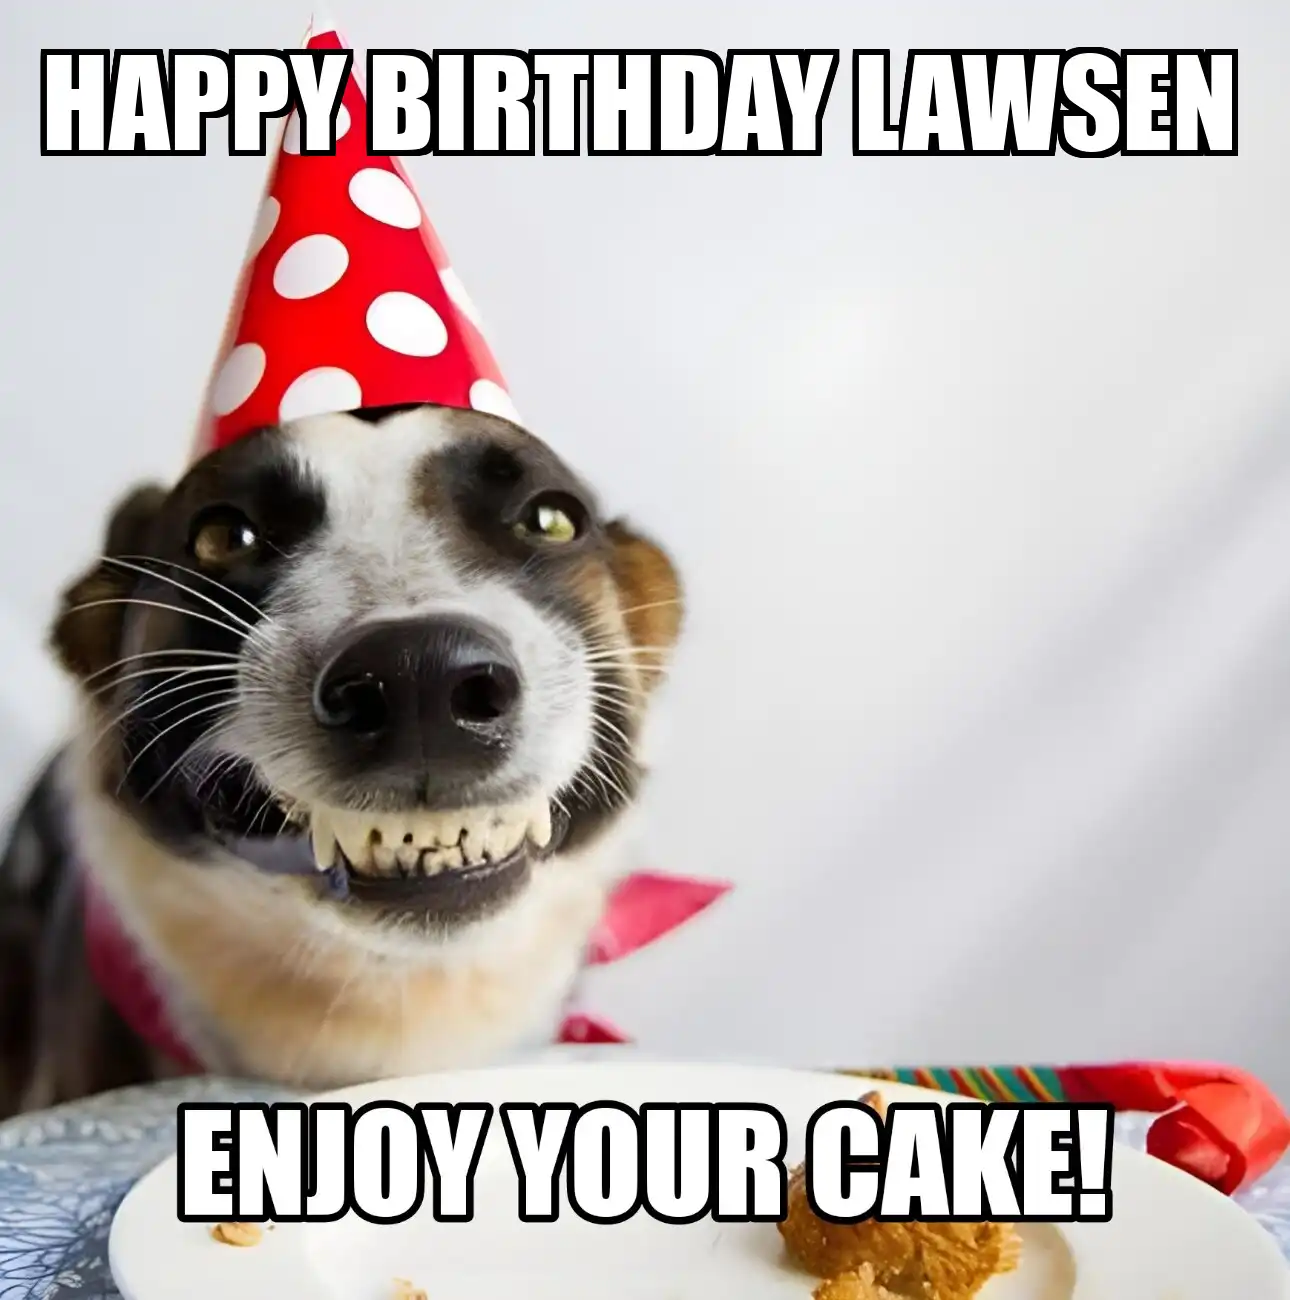 Happy Birthday Lawsen Enjoy Your Cake Dog Meme